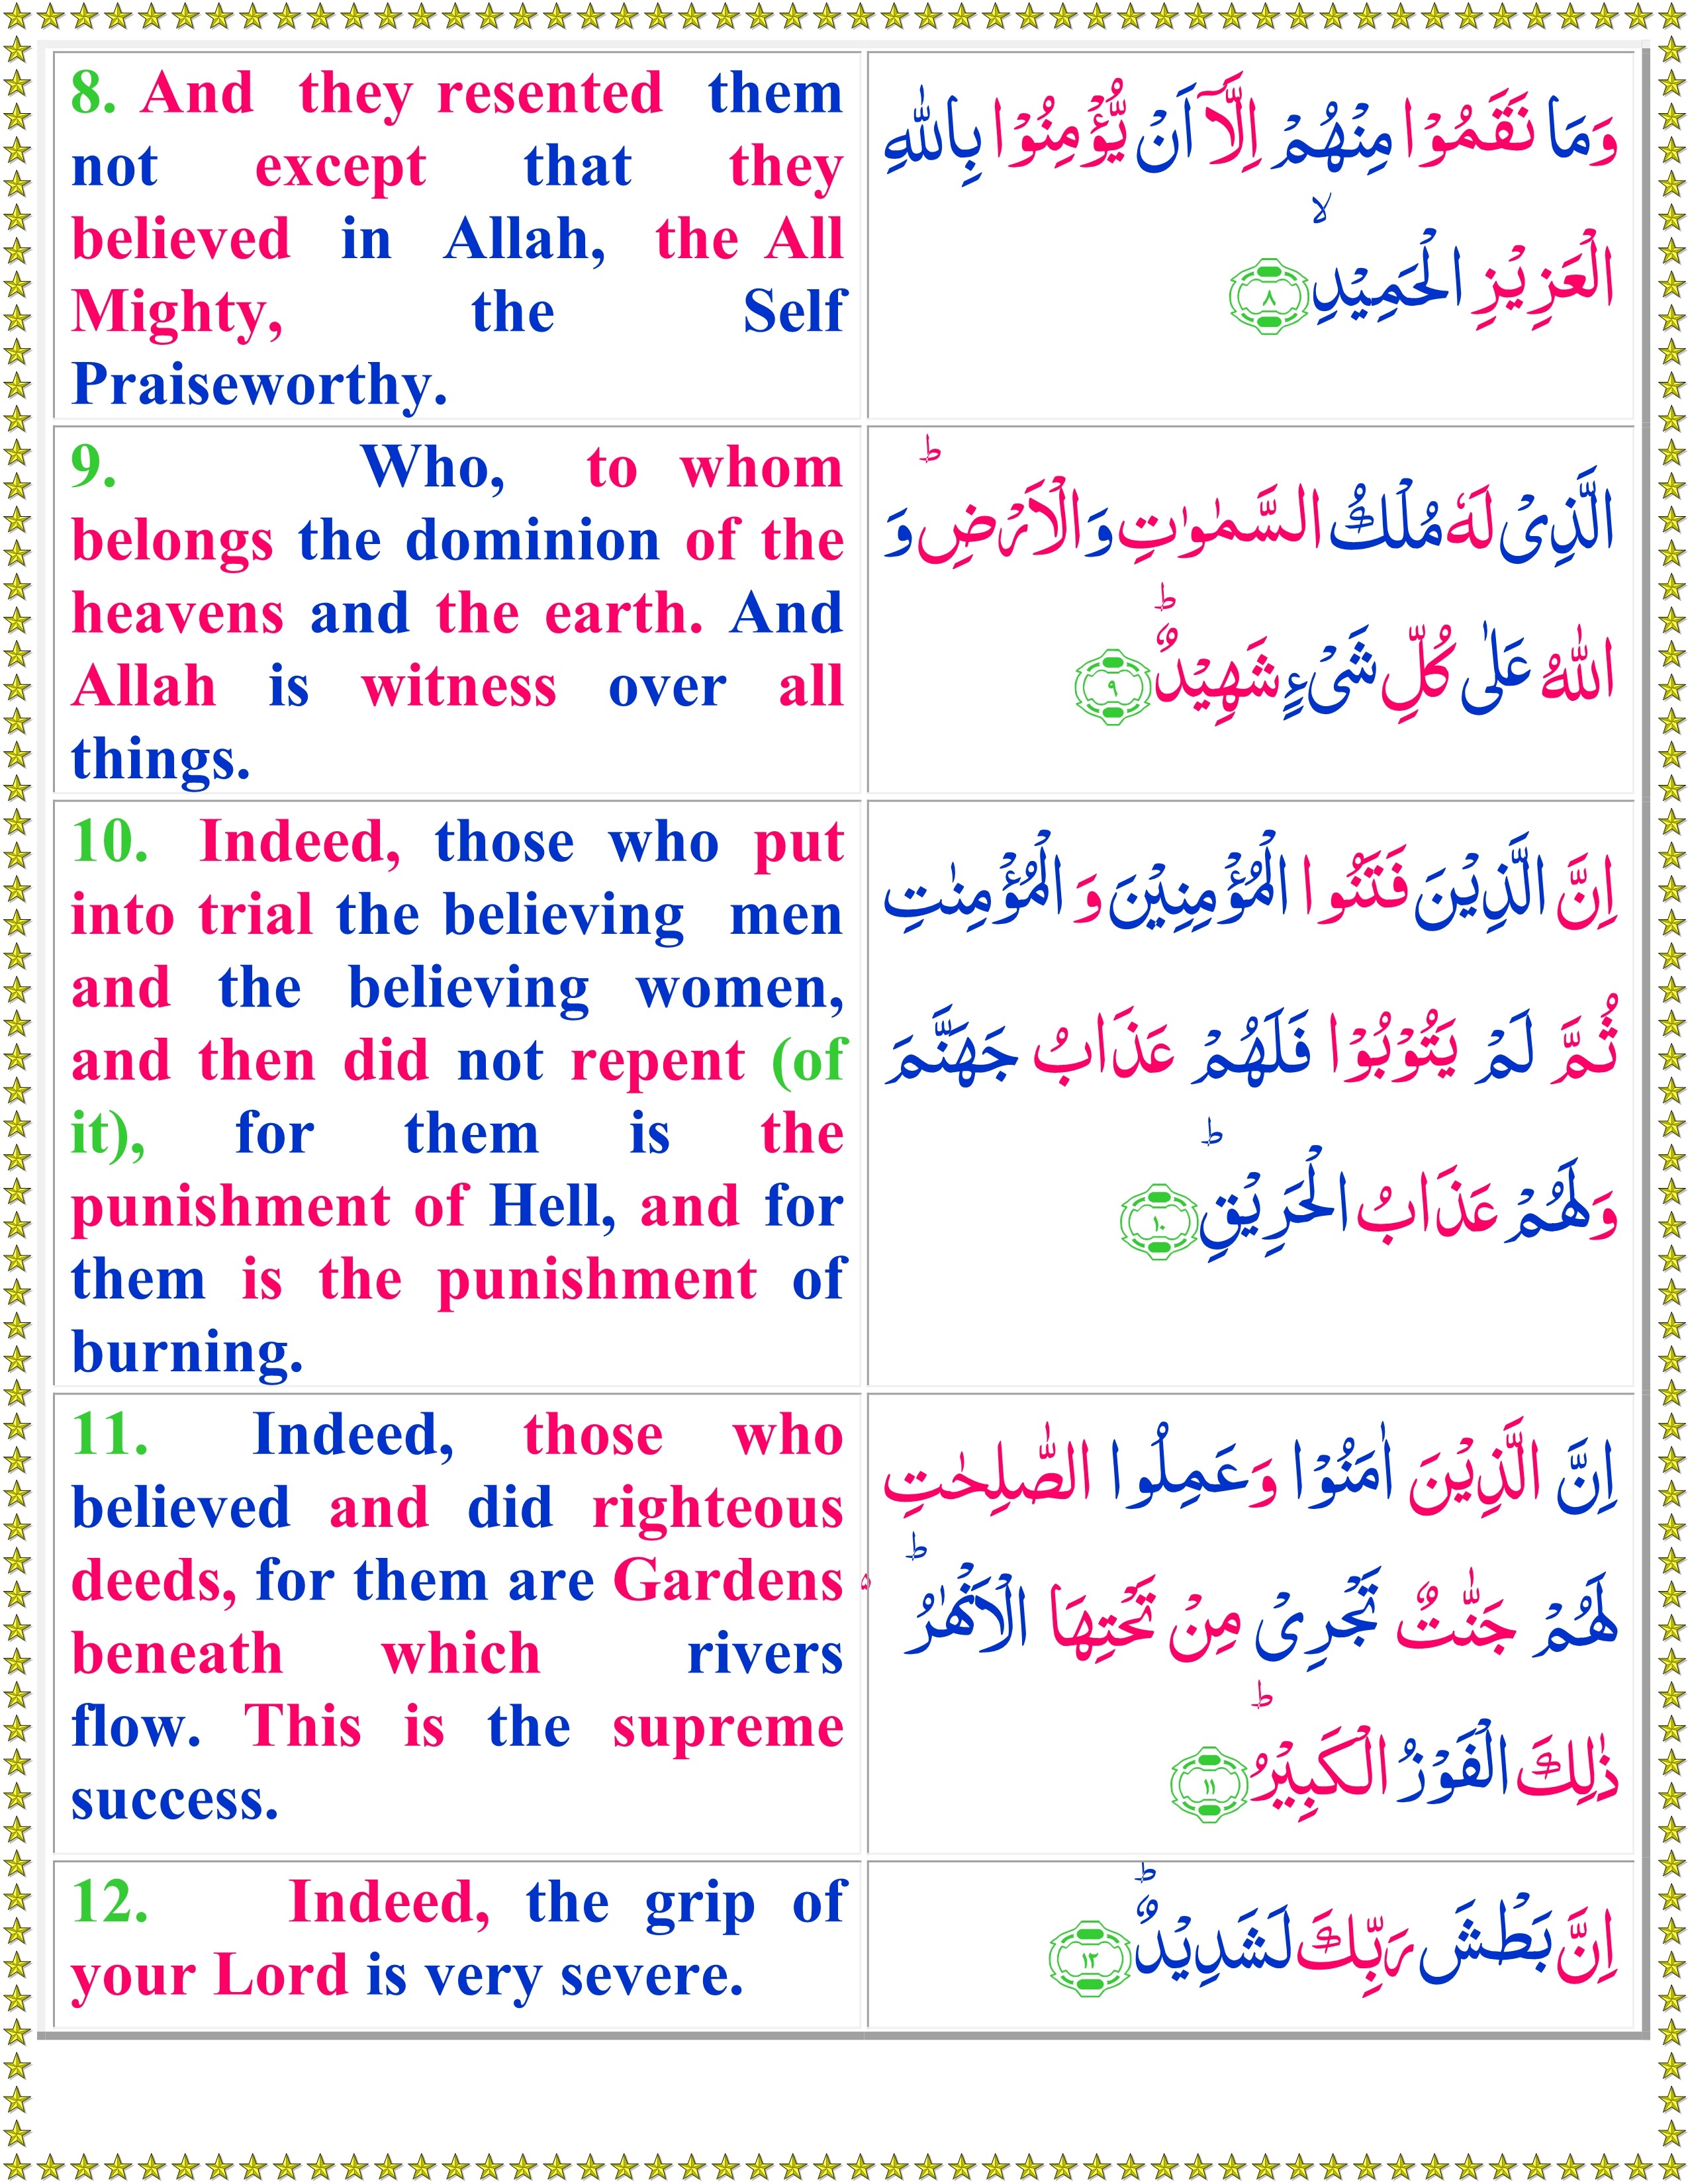 Read Surah Al Burooj With English Translation Quran O Sunnat